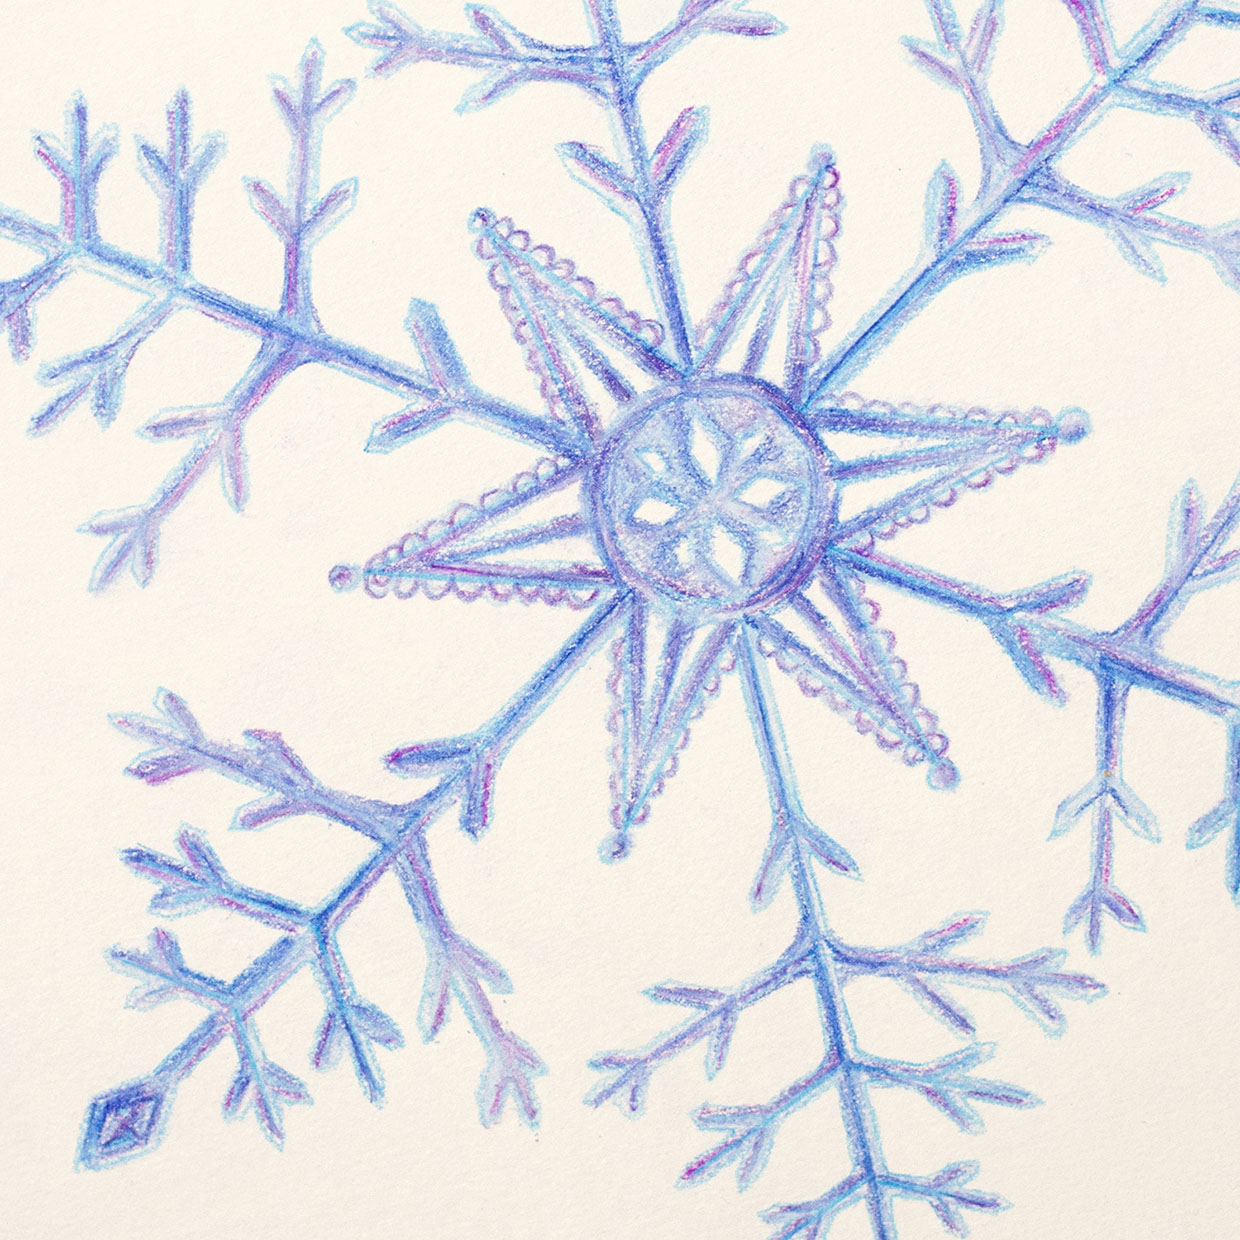 Snowflake drawing part 2 step 4